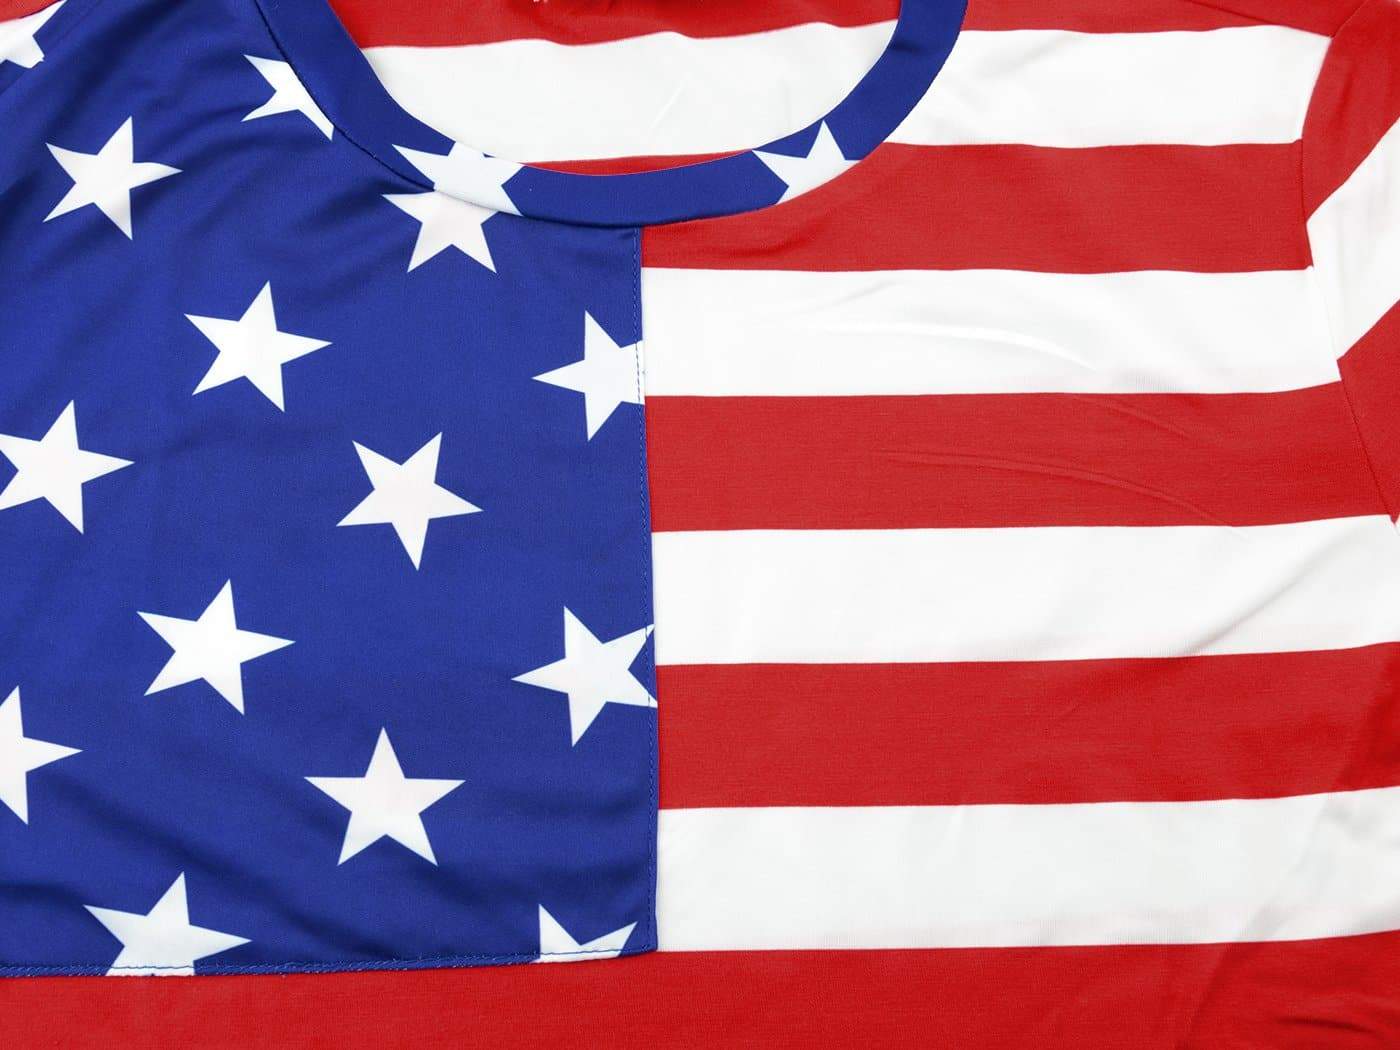 Anna-Kaci Women's Round Neck American USA  Flag Top July of 4th Patriotic T-Shirt Blouse | Anna-Kaci